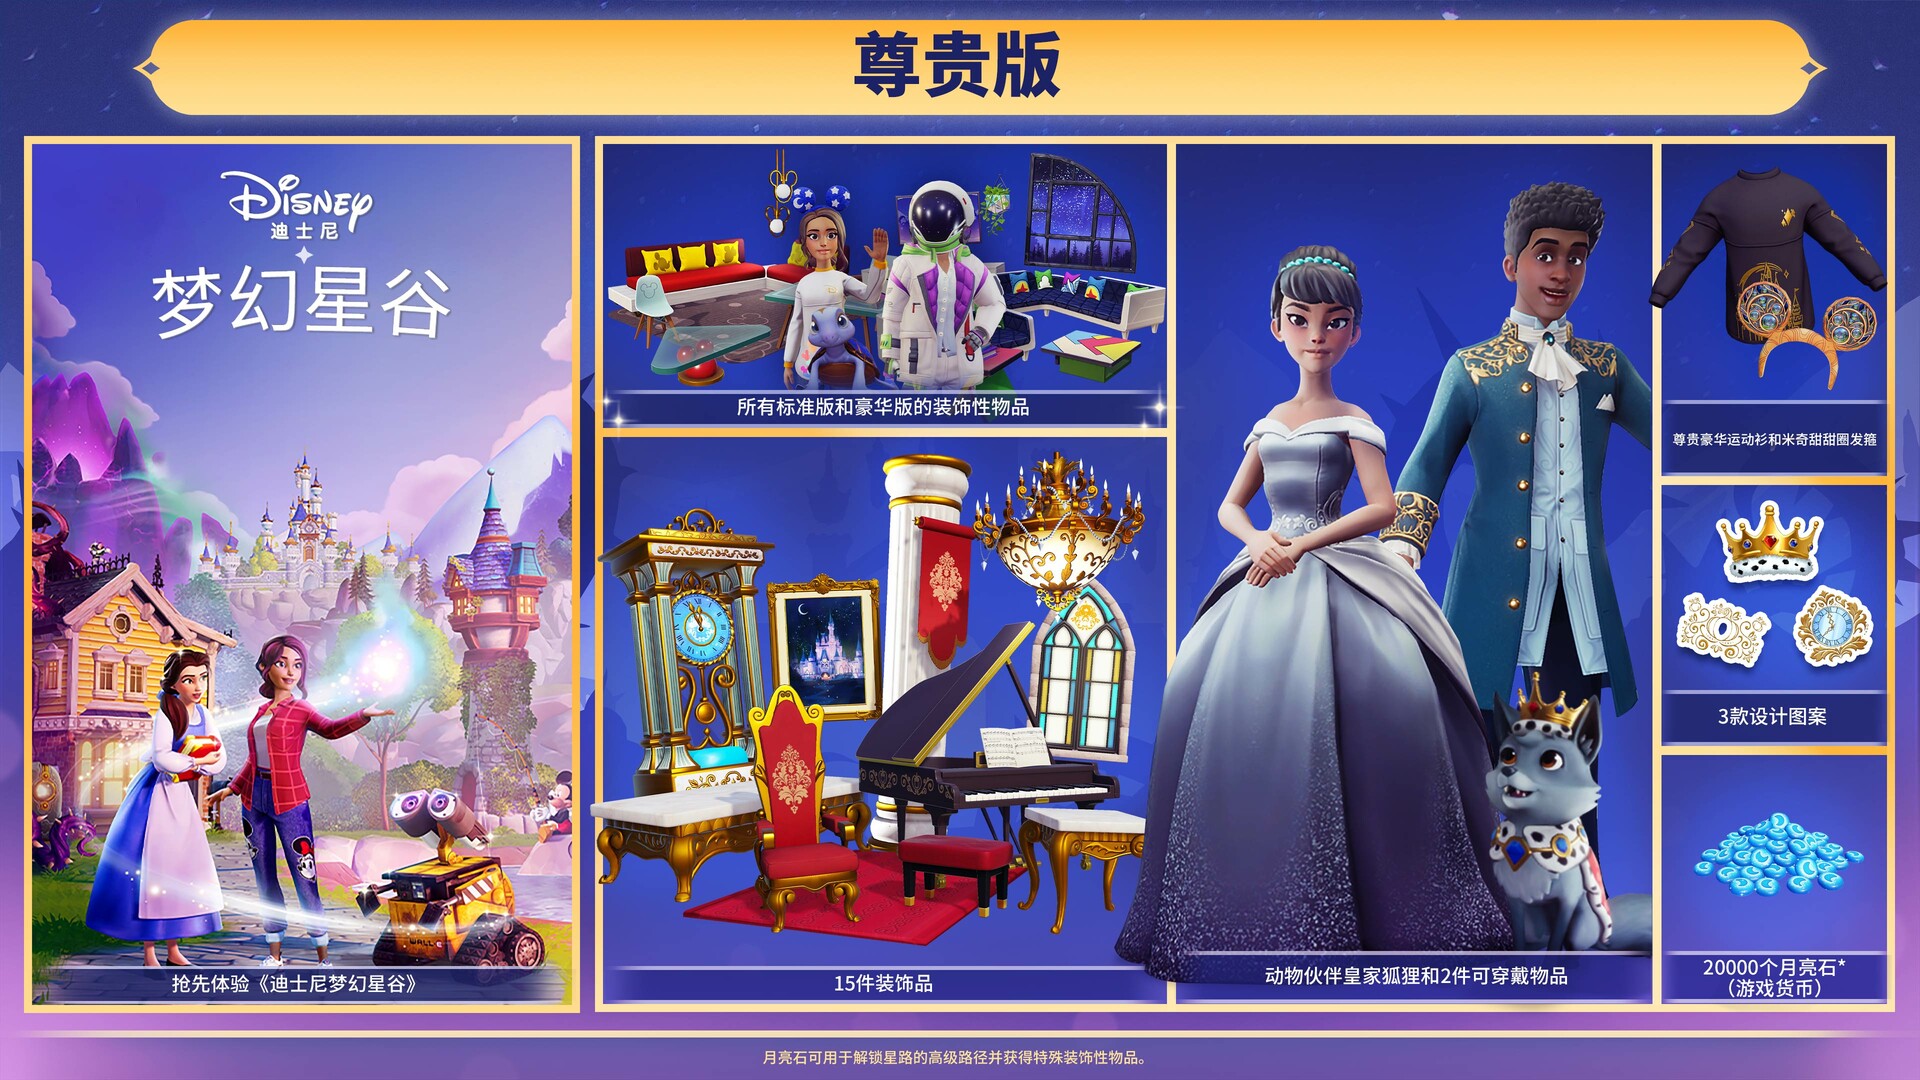 Disney Dreamlight Valley 迪士尼梦幻星谷|官方中文|豪华尊贵版-V1.2.3.31-巴斯光年+全DLC - 白嫖游戏网_白嫖游戏网